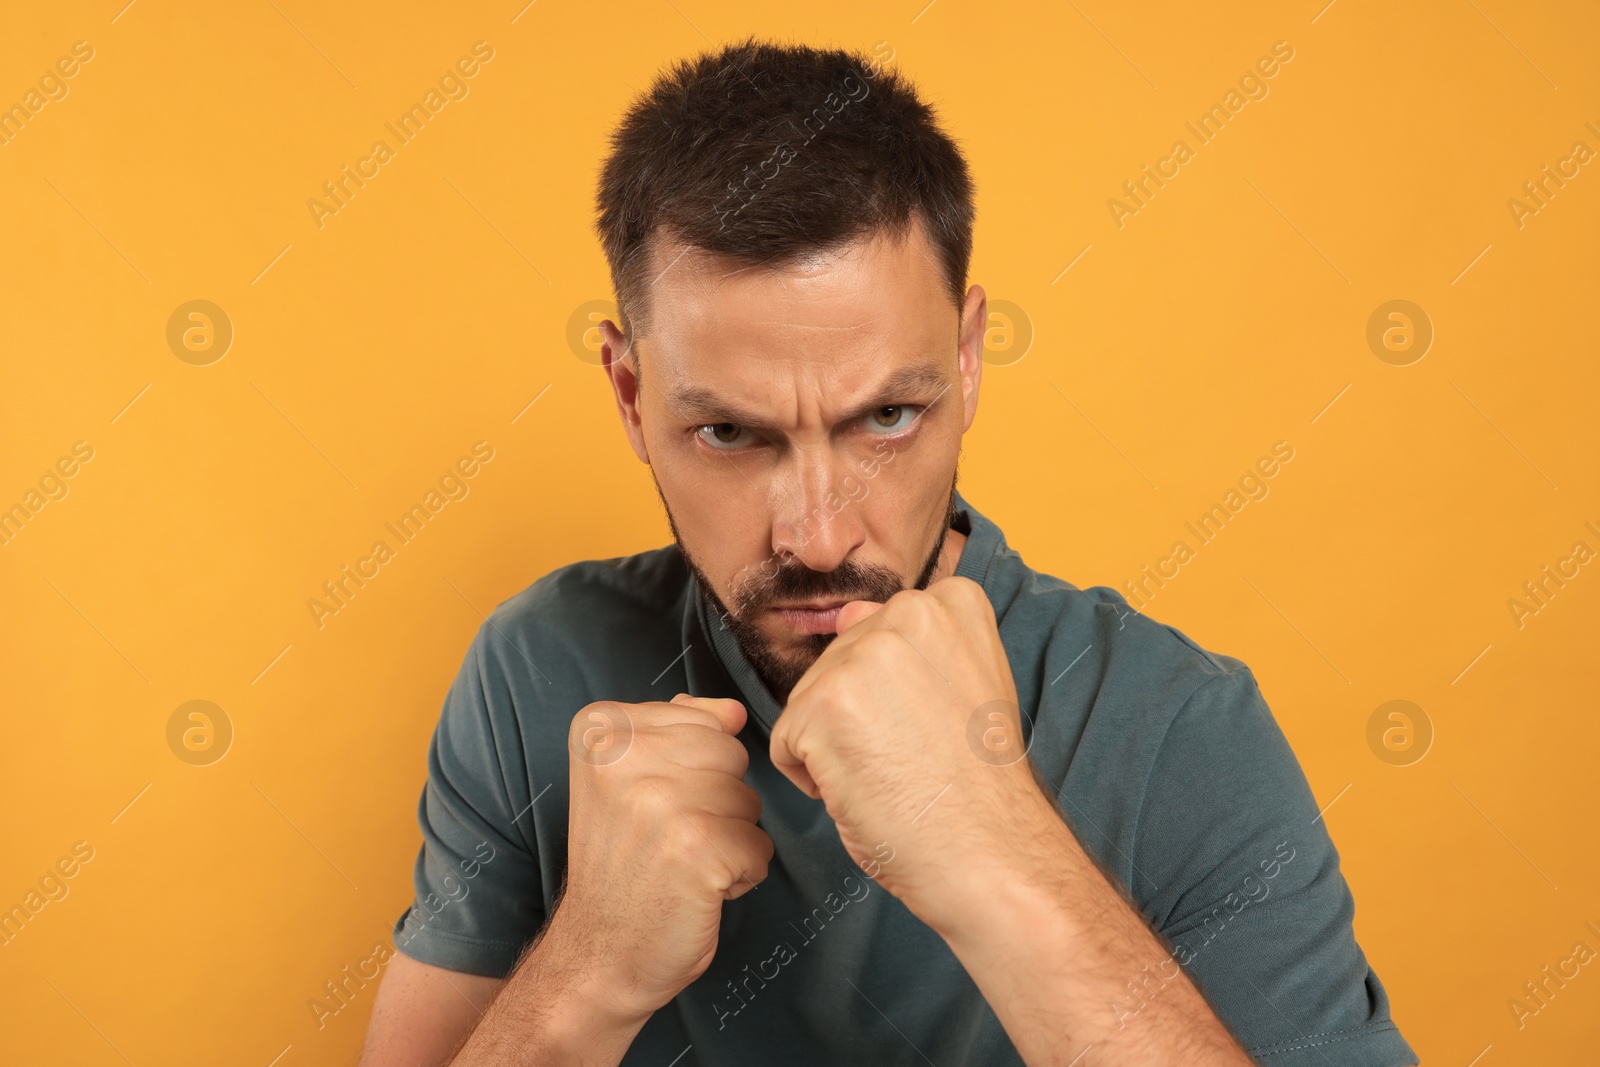 Photo of Man ready to fight on orange background